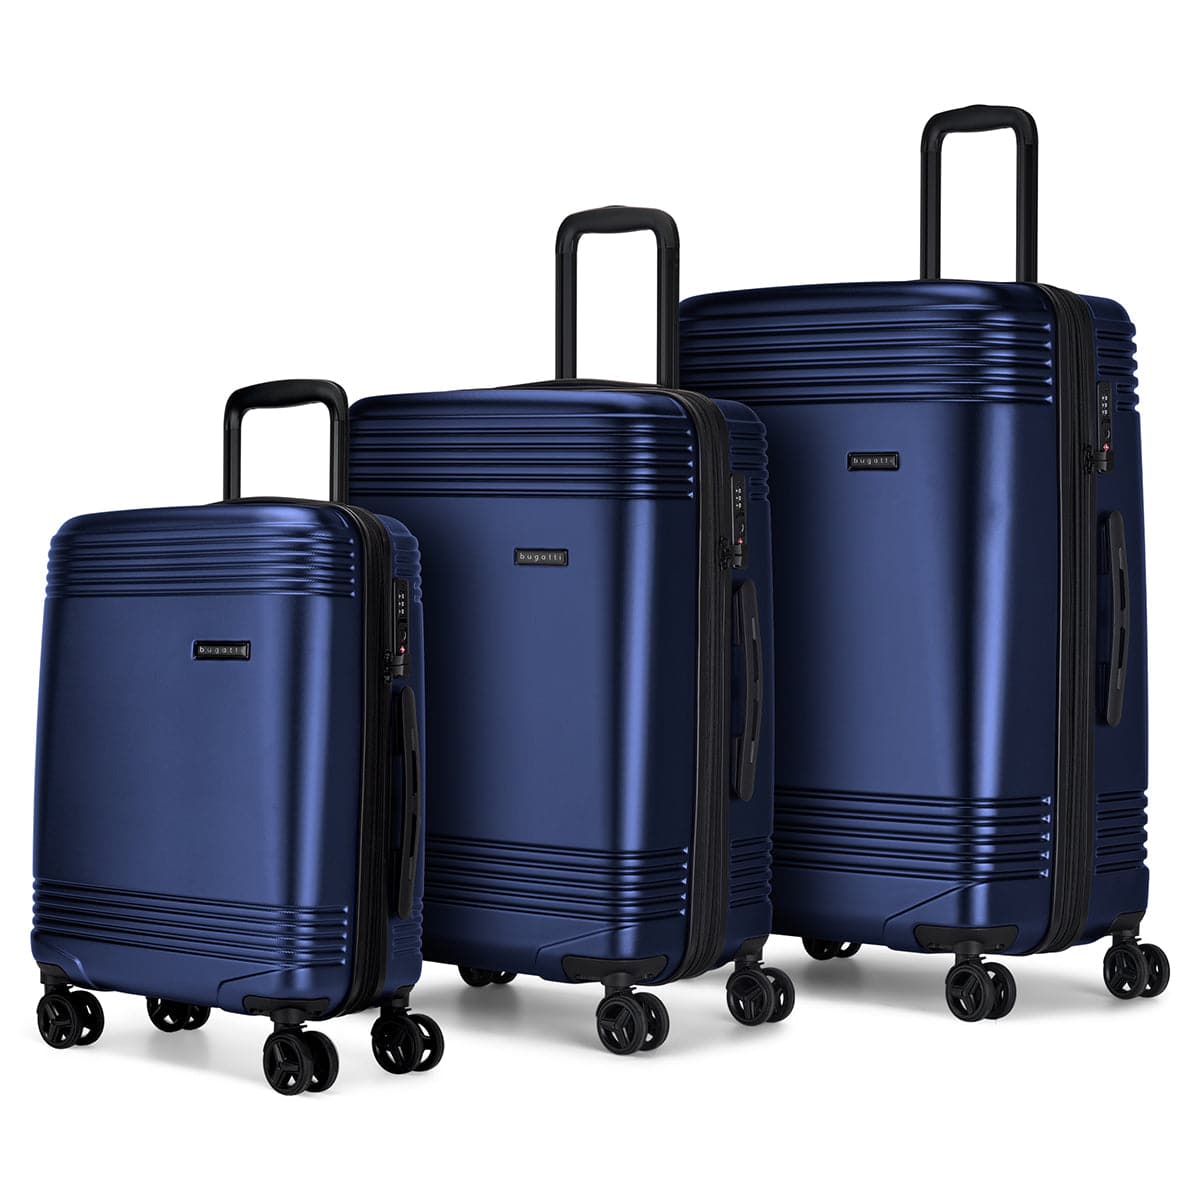 Bugatti Nashville 3 Piece Luggage Set